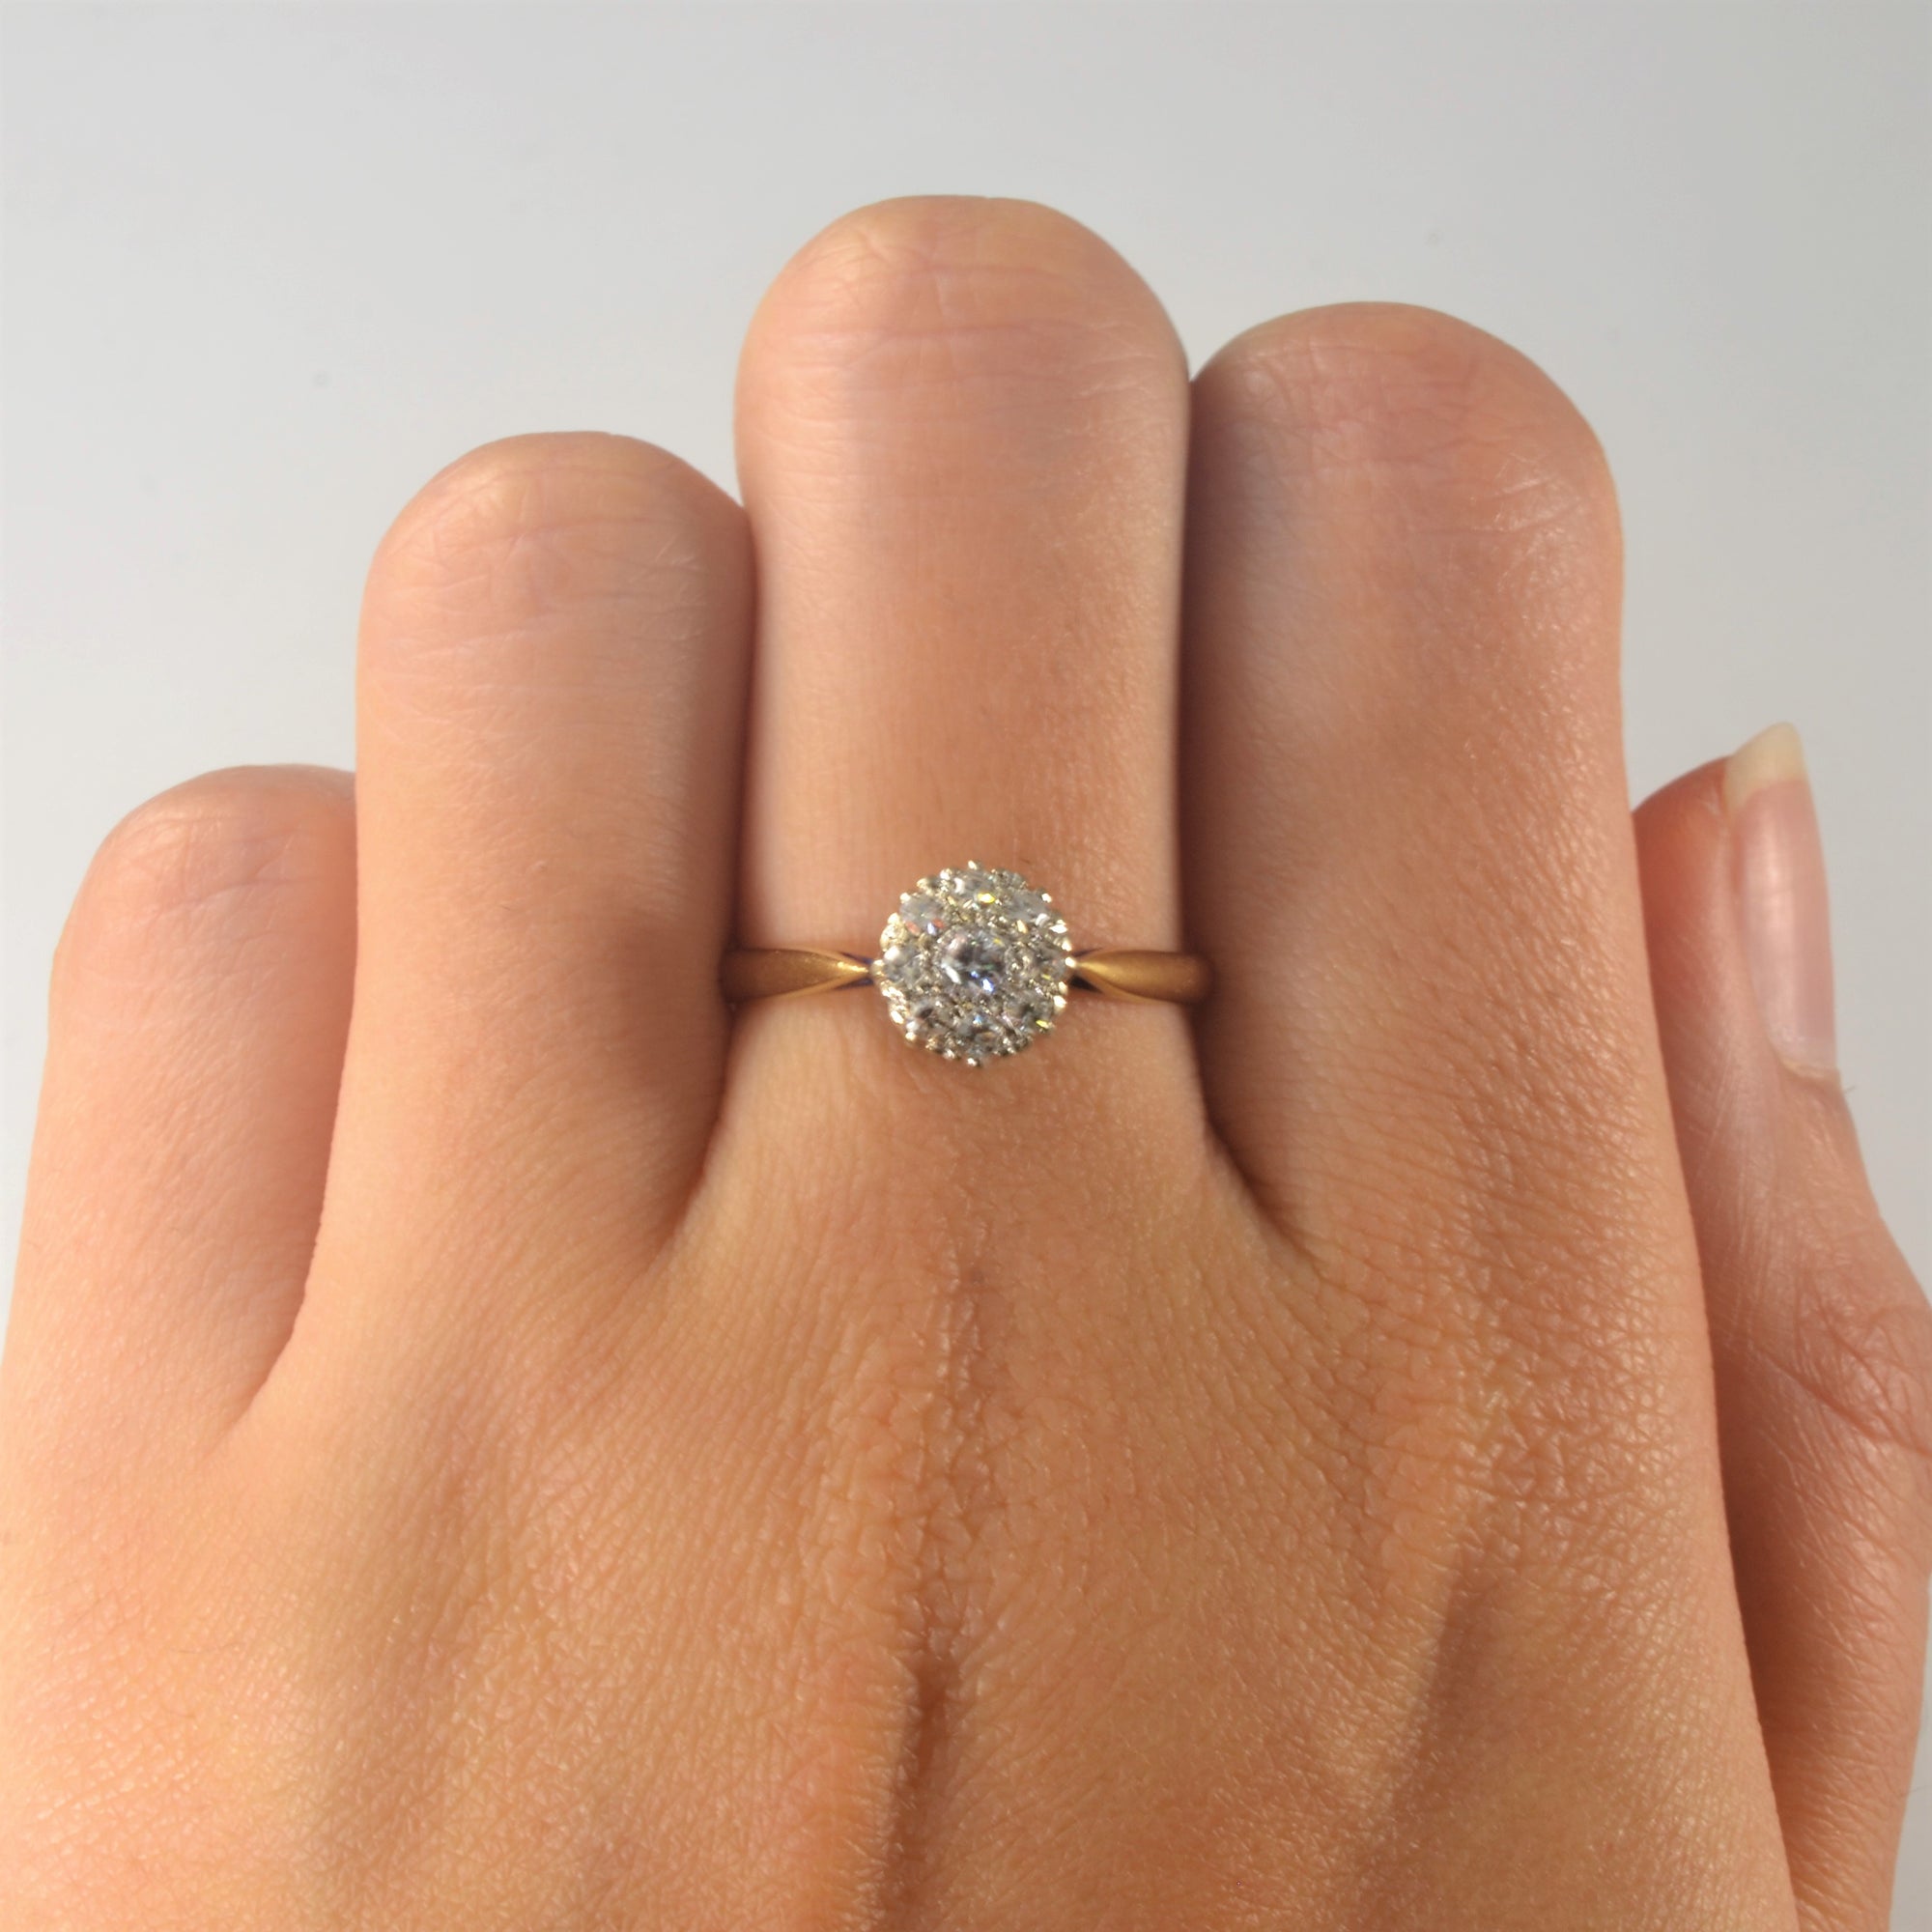 1950s Cluster Set Diamond Ring | 0.20ctw | SZ 7 |